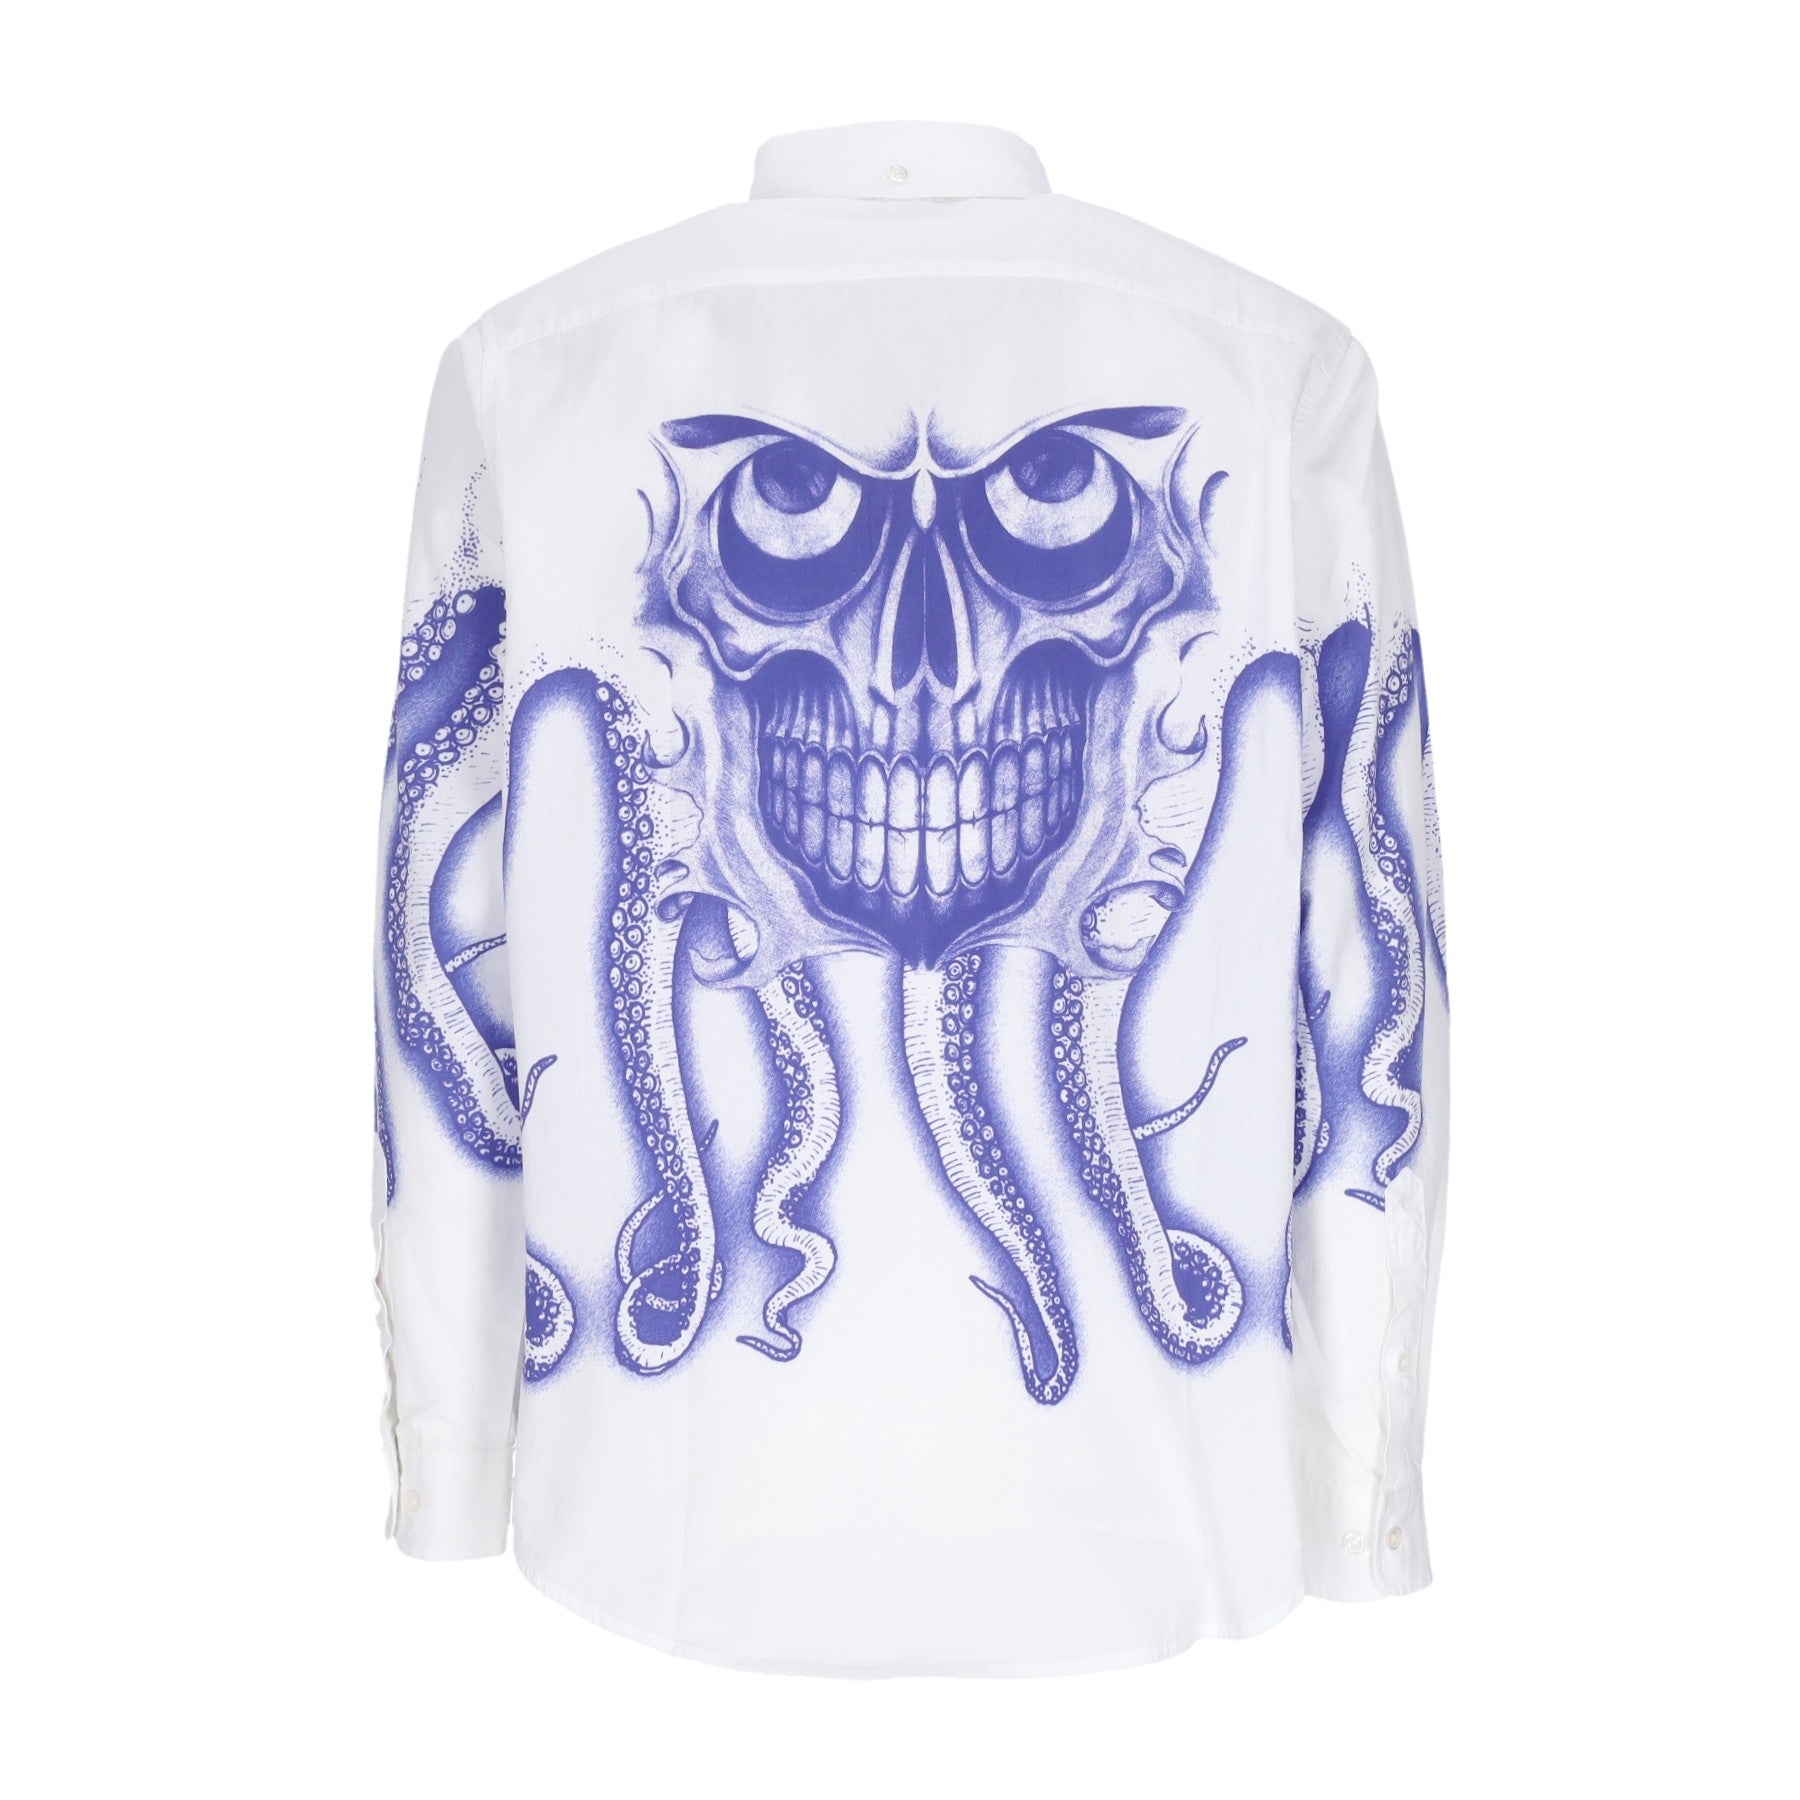 Octopus, Camicia Manica Lunga Uomo Skull L/s Shirt, White